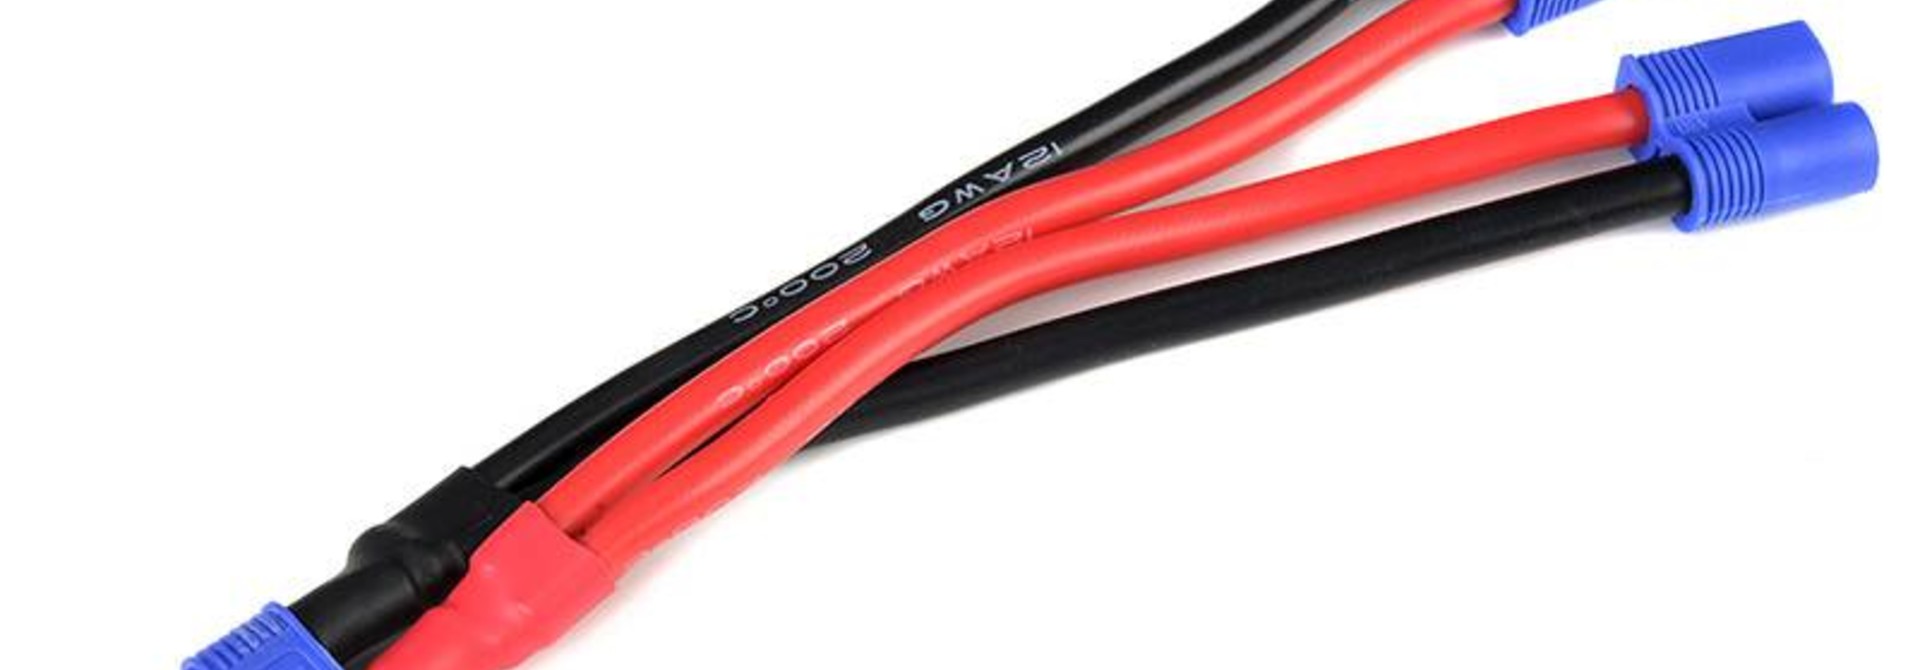 Revtec - Power Y-kabel - Parallel - EC-3 - 14AWG Siliconen-kabel - 12cm - 1 st